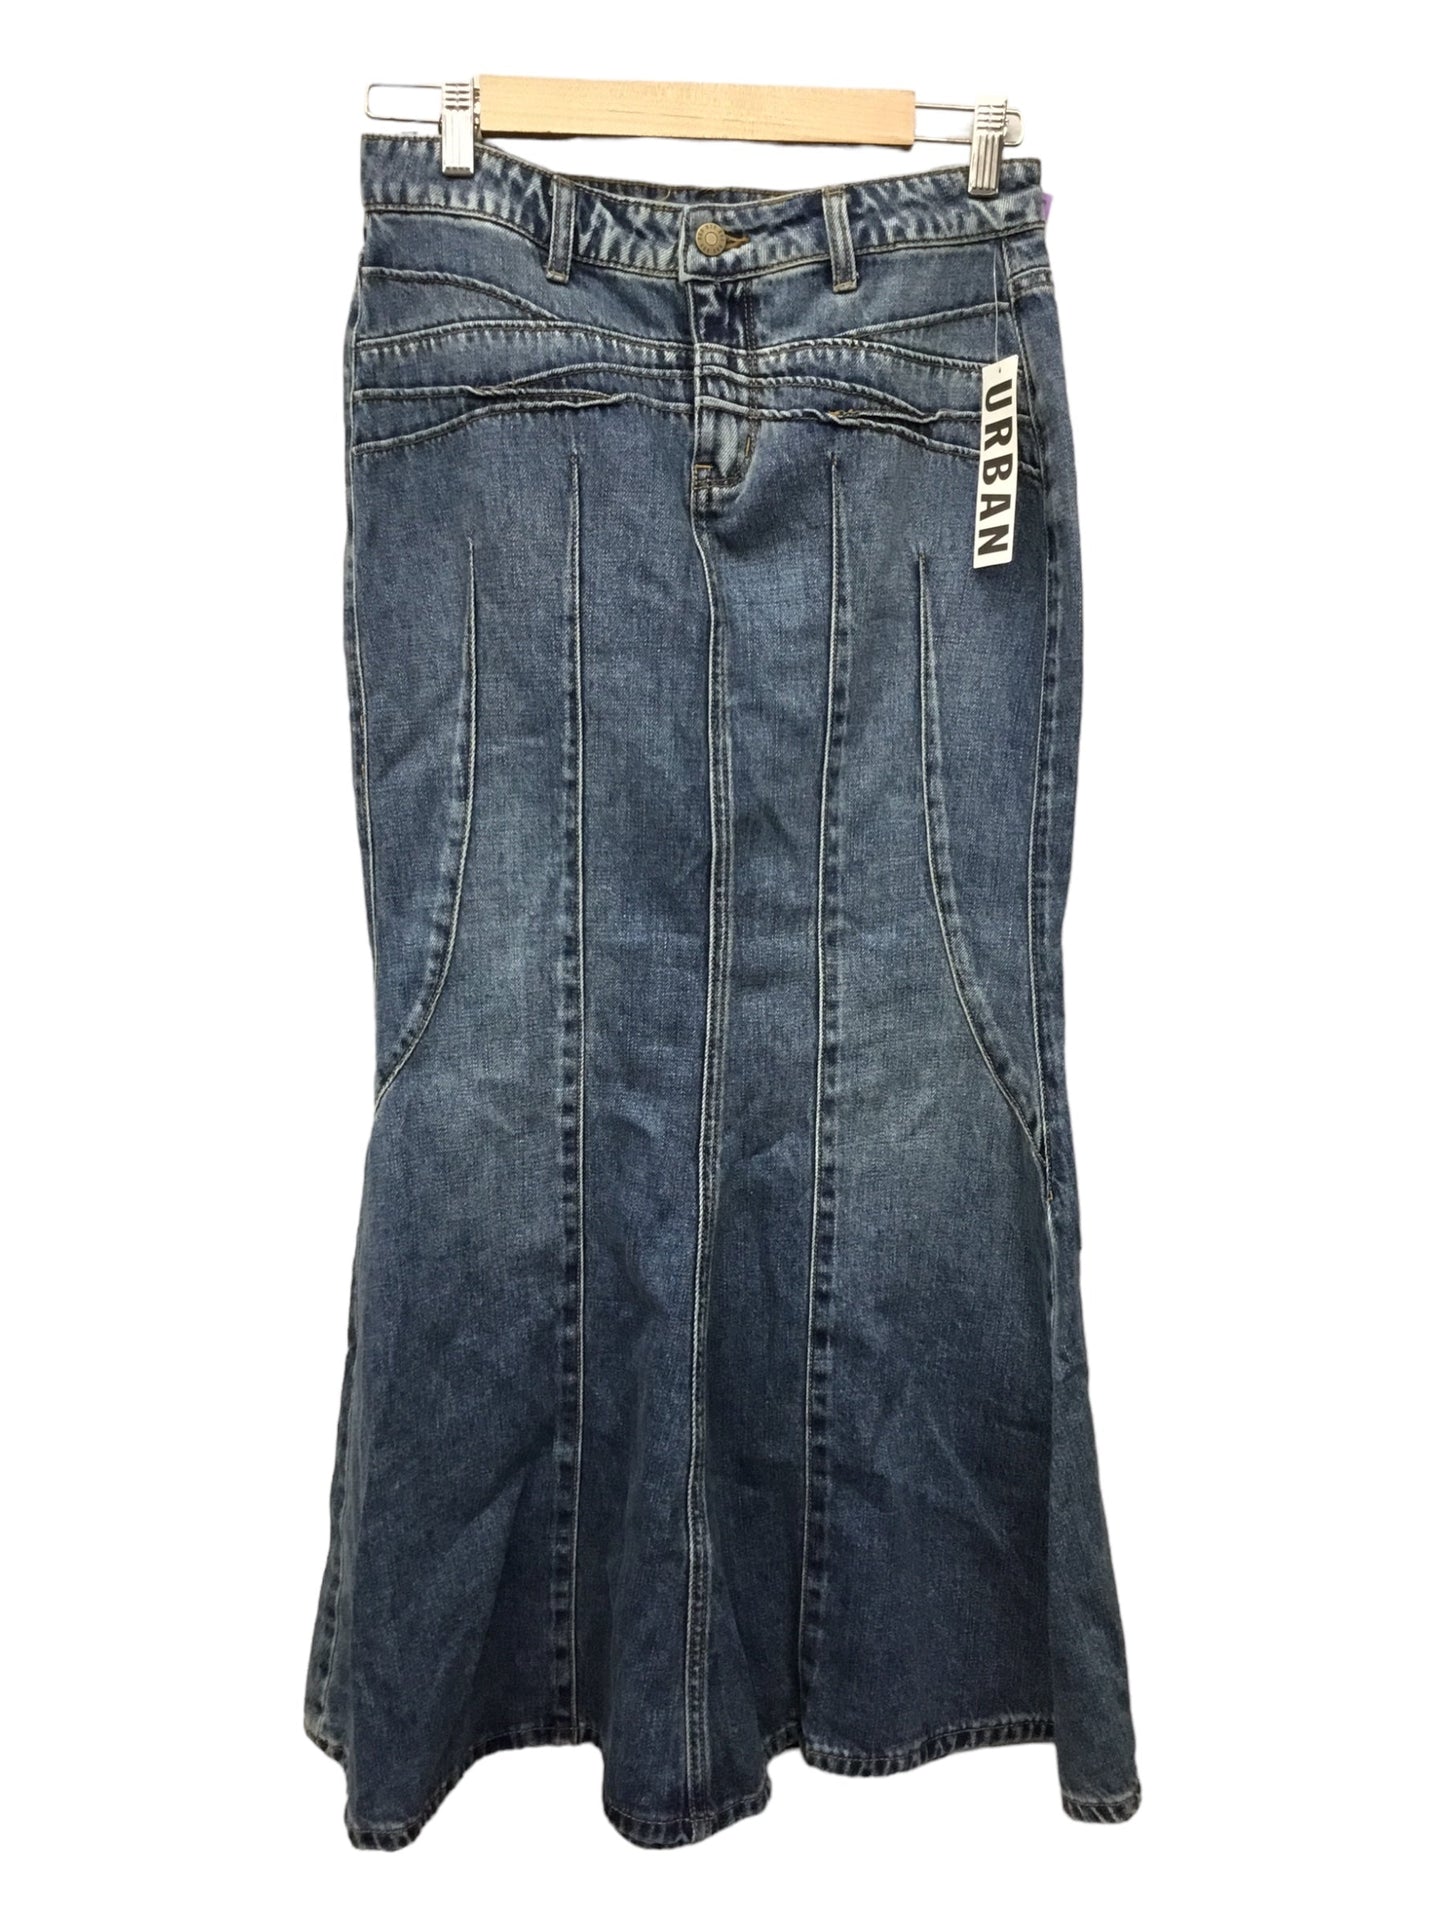 NWT Blue Denim Skirt Maxi Bdg, Size S